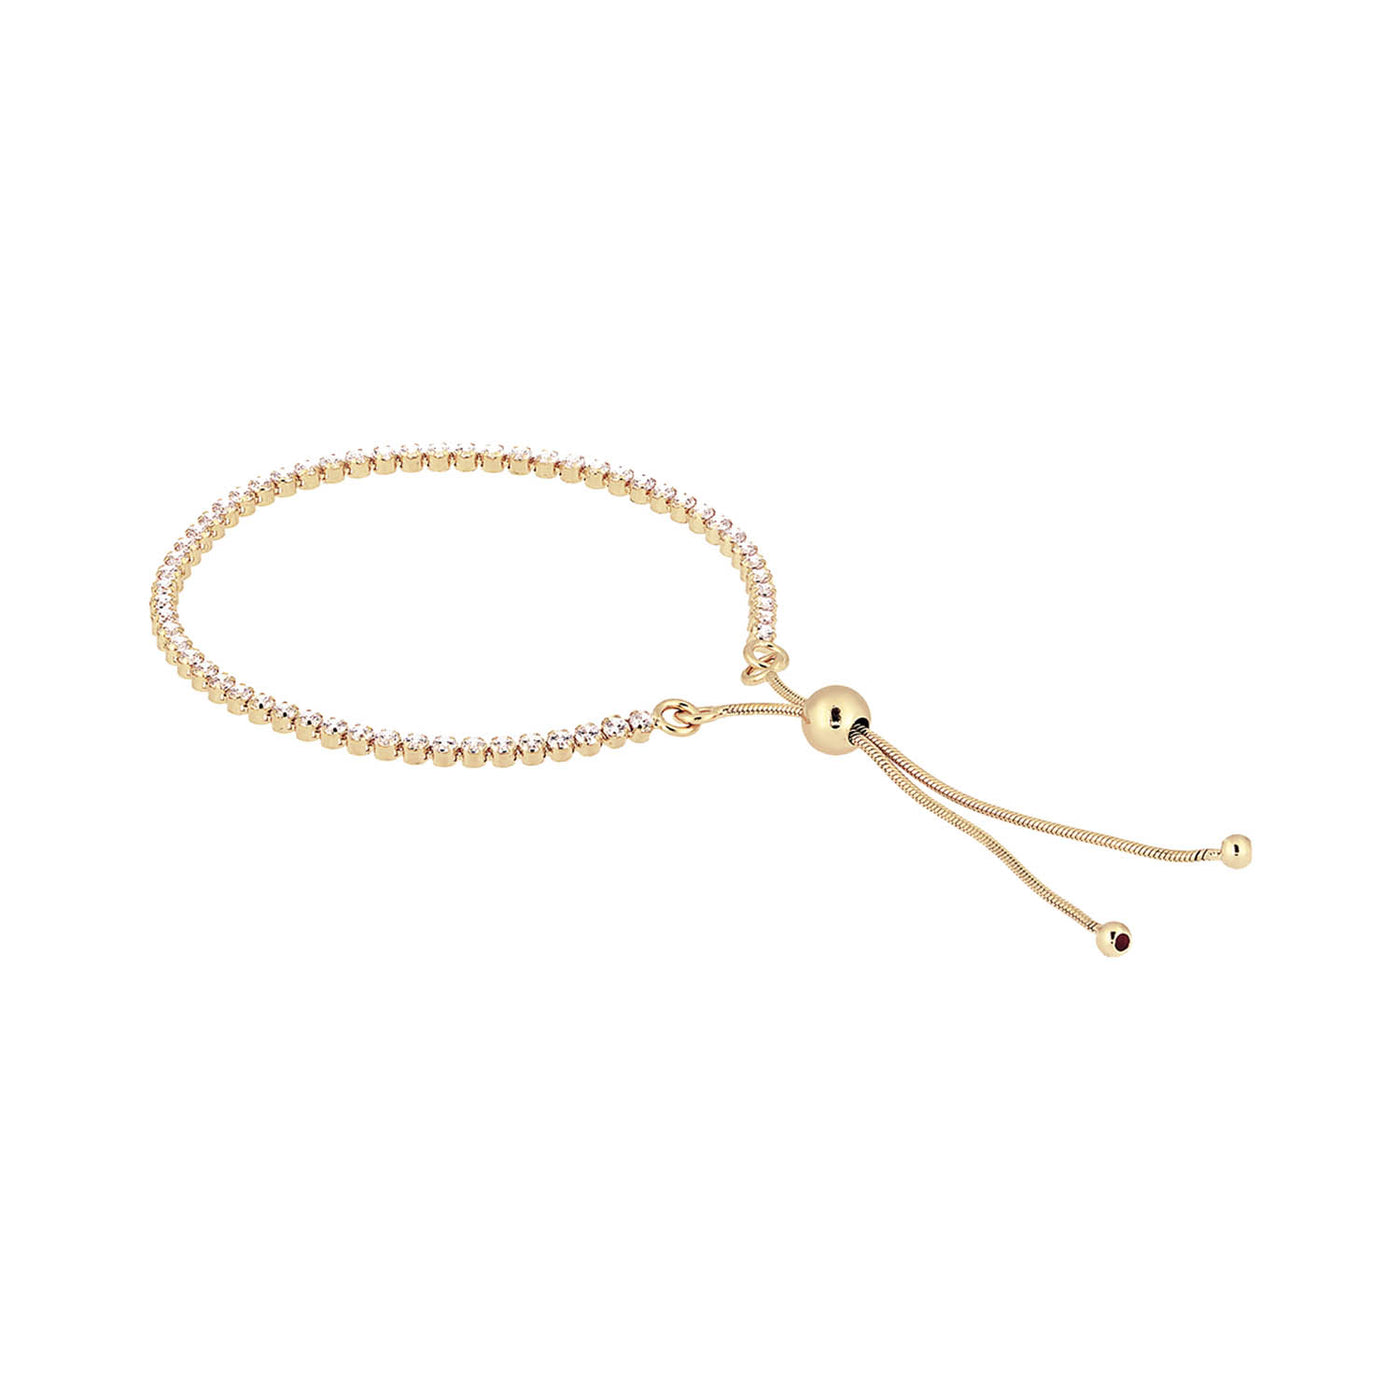 Bronzallure 'Altissima' Golden CZ Tennis Bracelet.